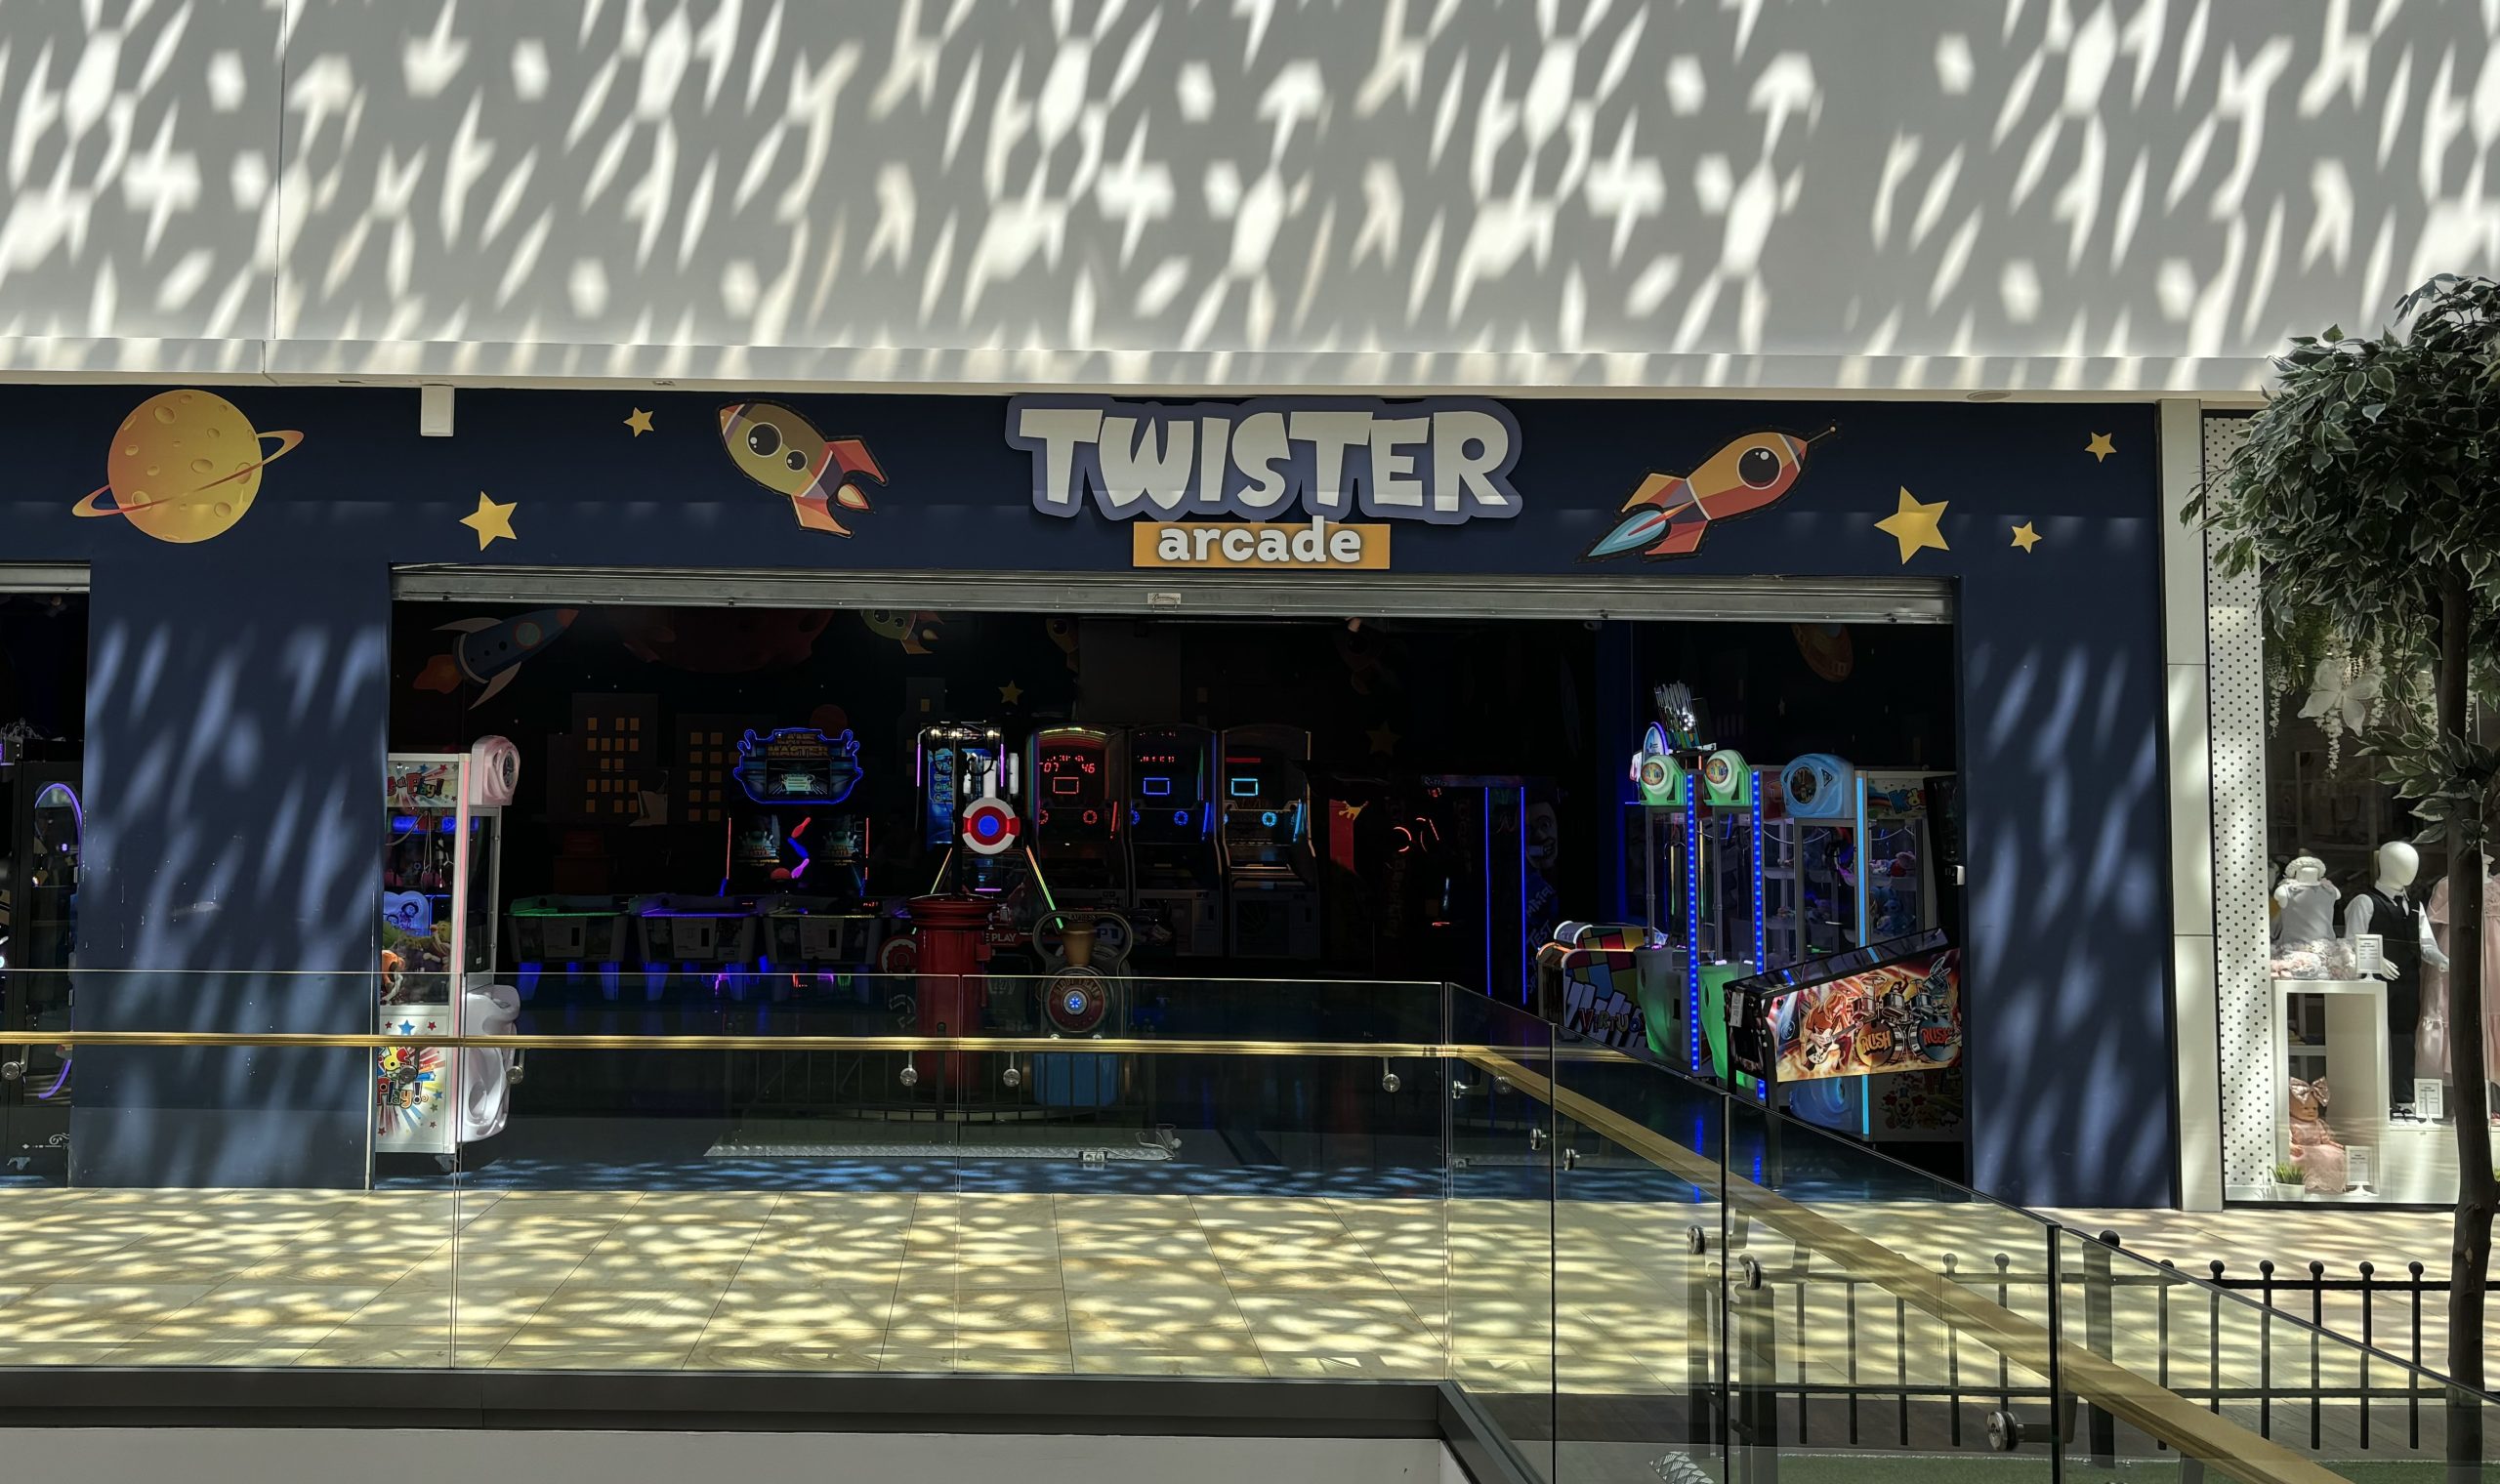 Twister arcade